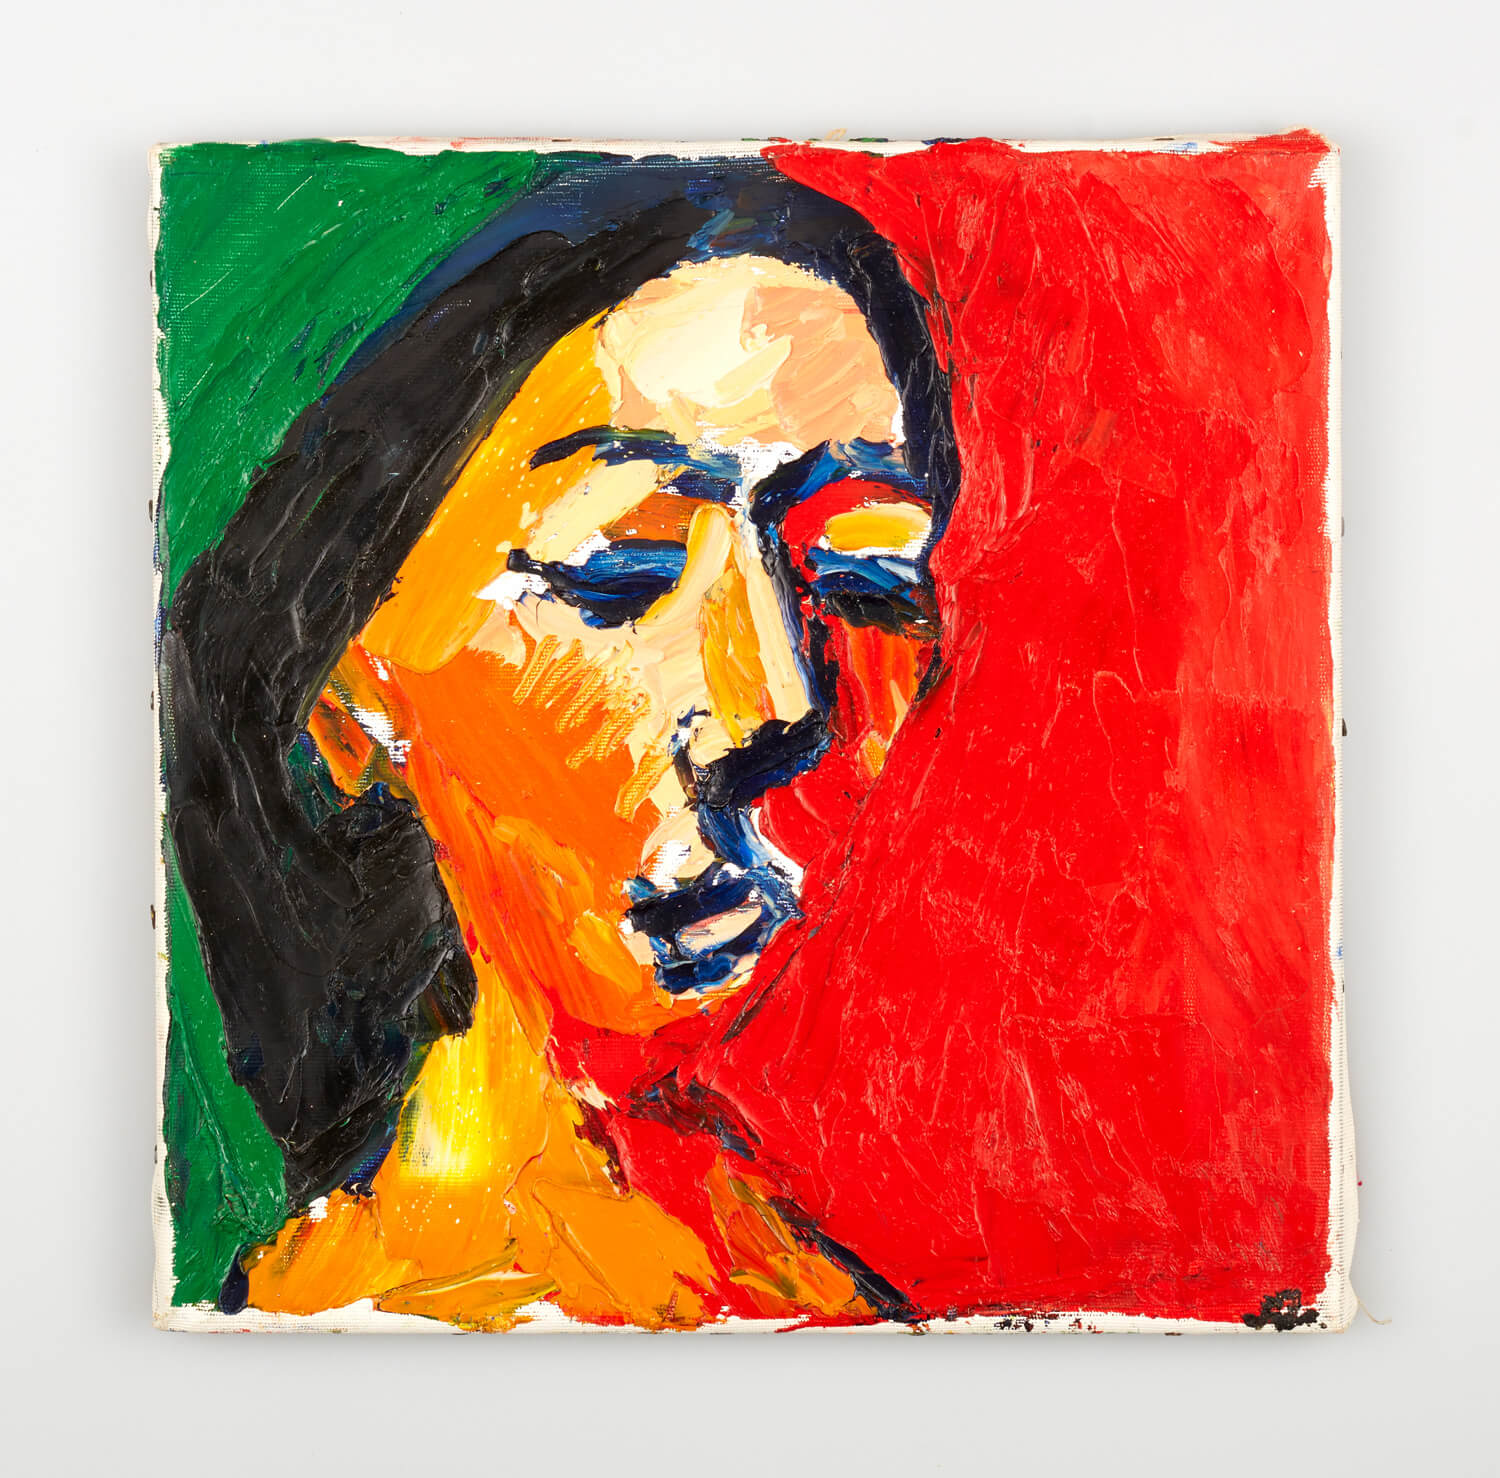 JB239 - Woman's Head - 1995 - 30 x 30 cm - Oil on canvas